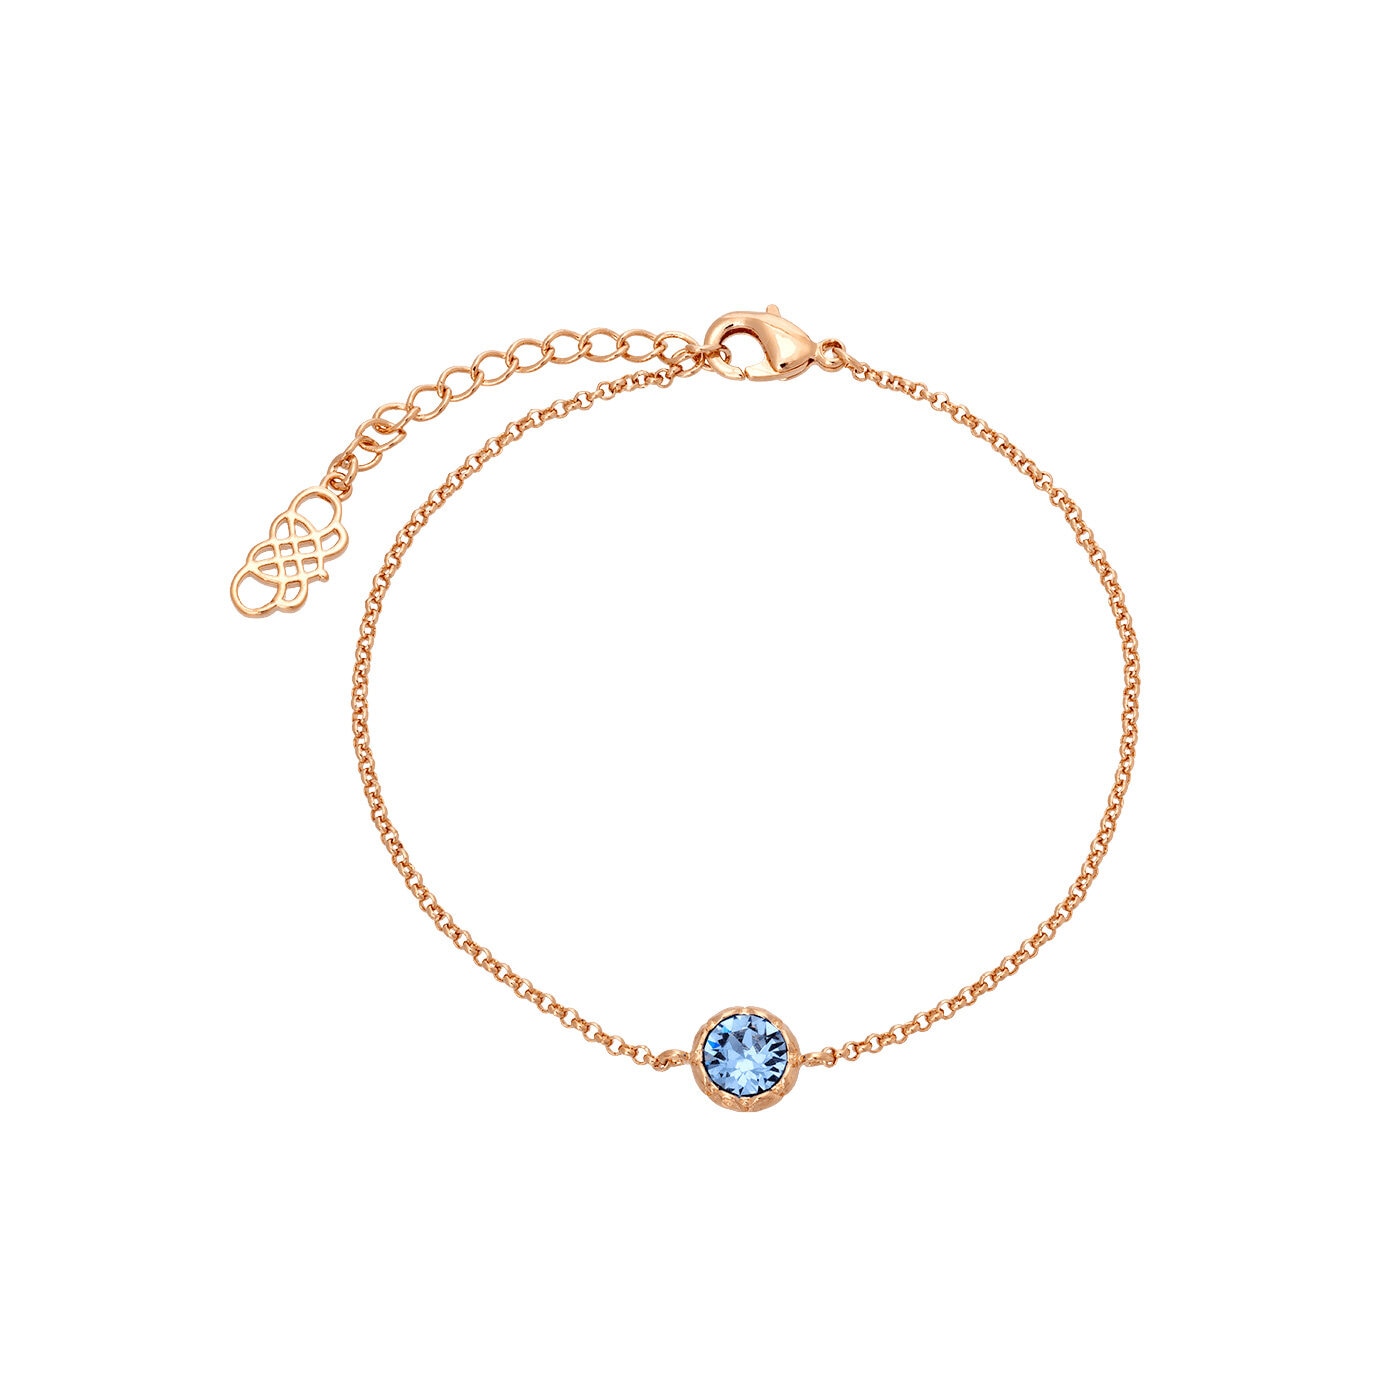 Petite Victoria bracelet - Light sapphire